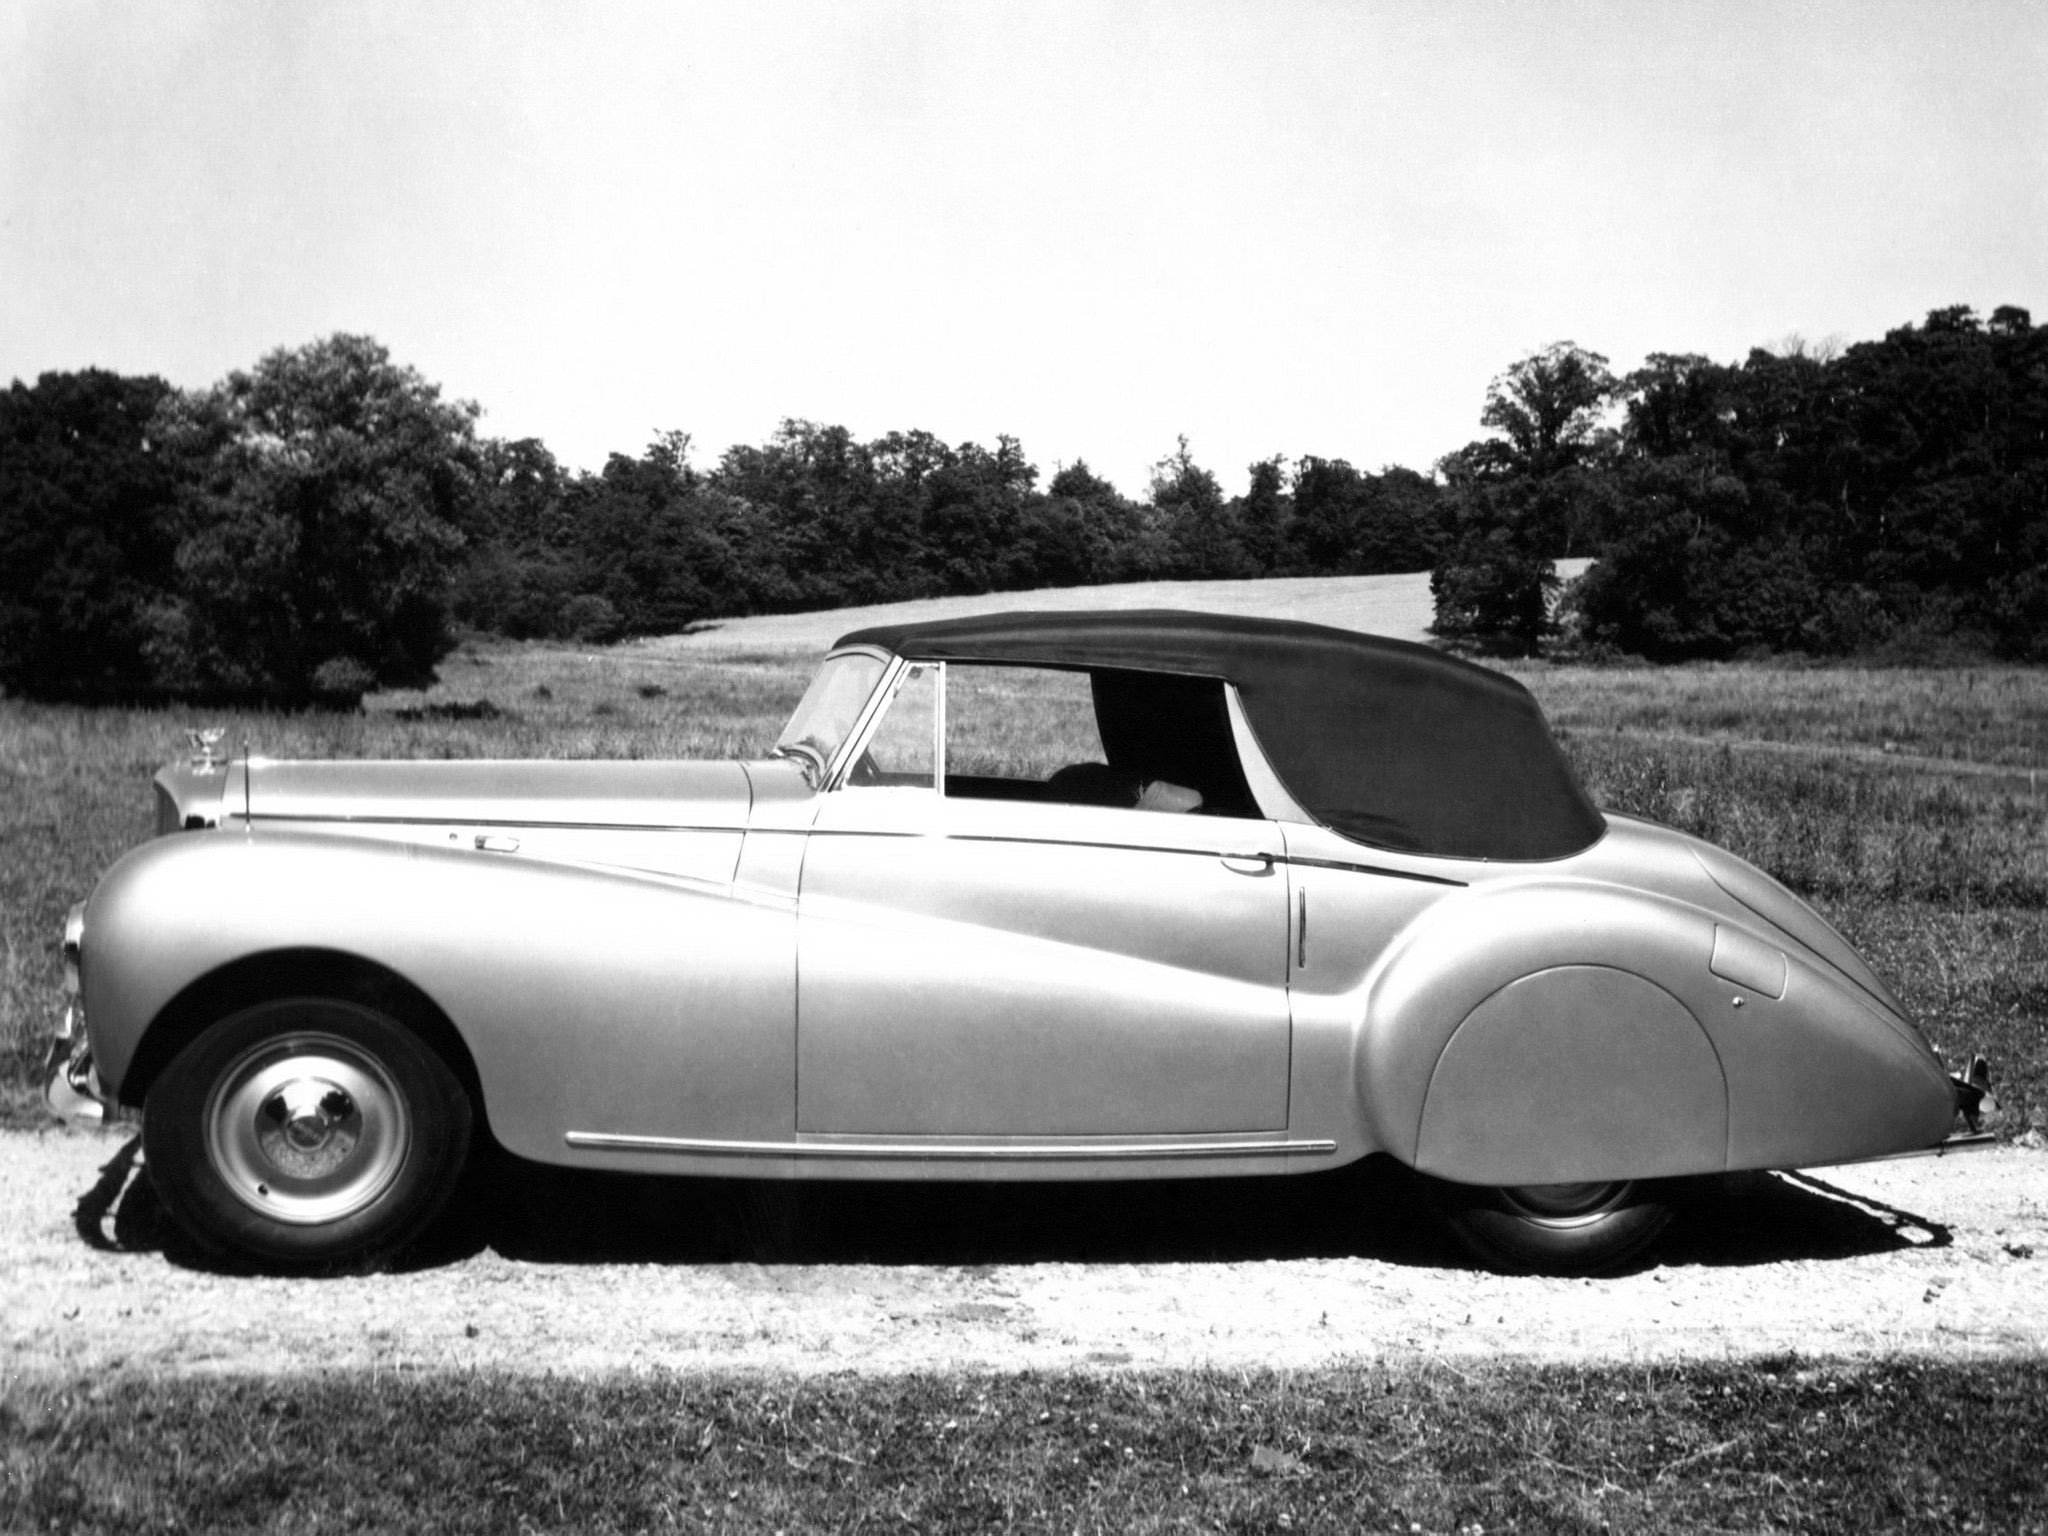 M6 mark. Bentley 1949. 1951 Bentley Mark vi Drophead Coupe. Bentley Mark IV. Машины без крыши ретро марка.